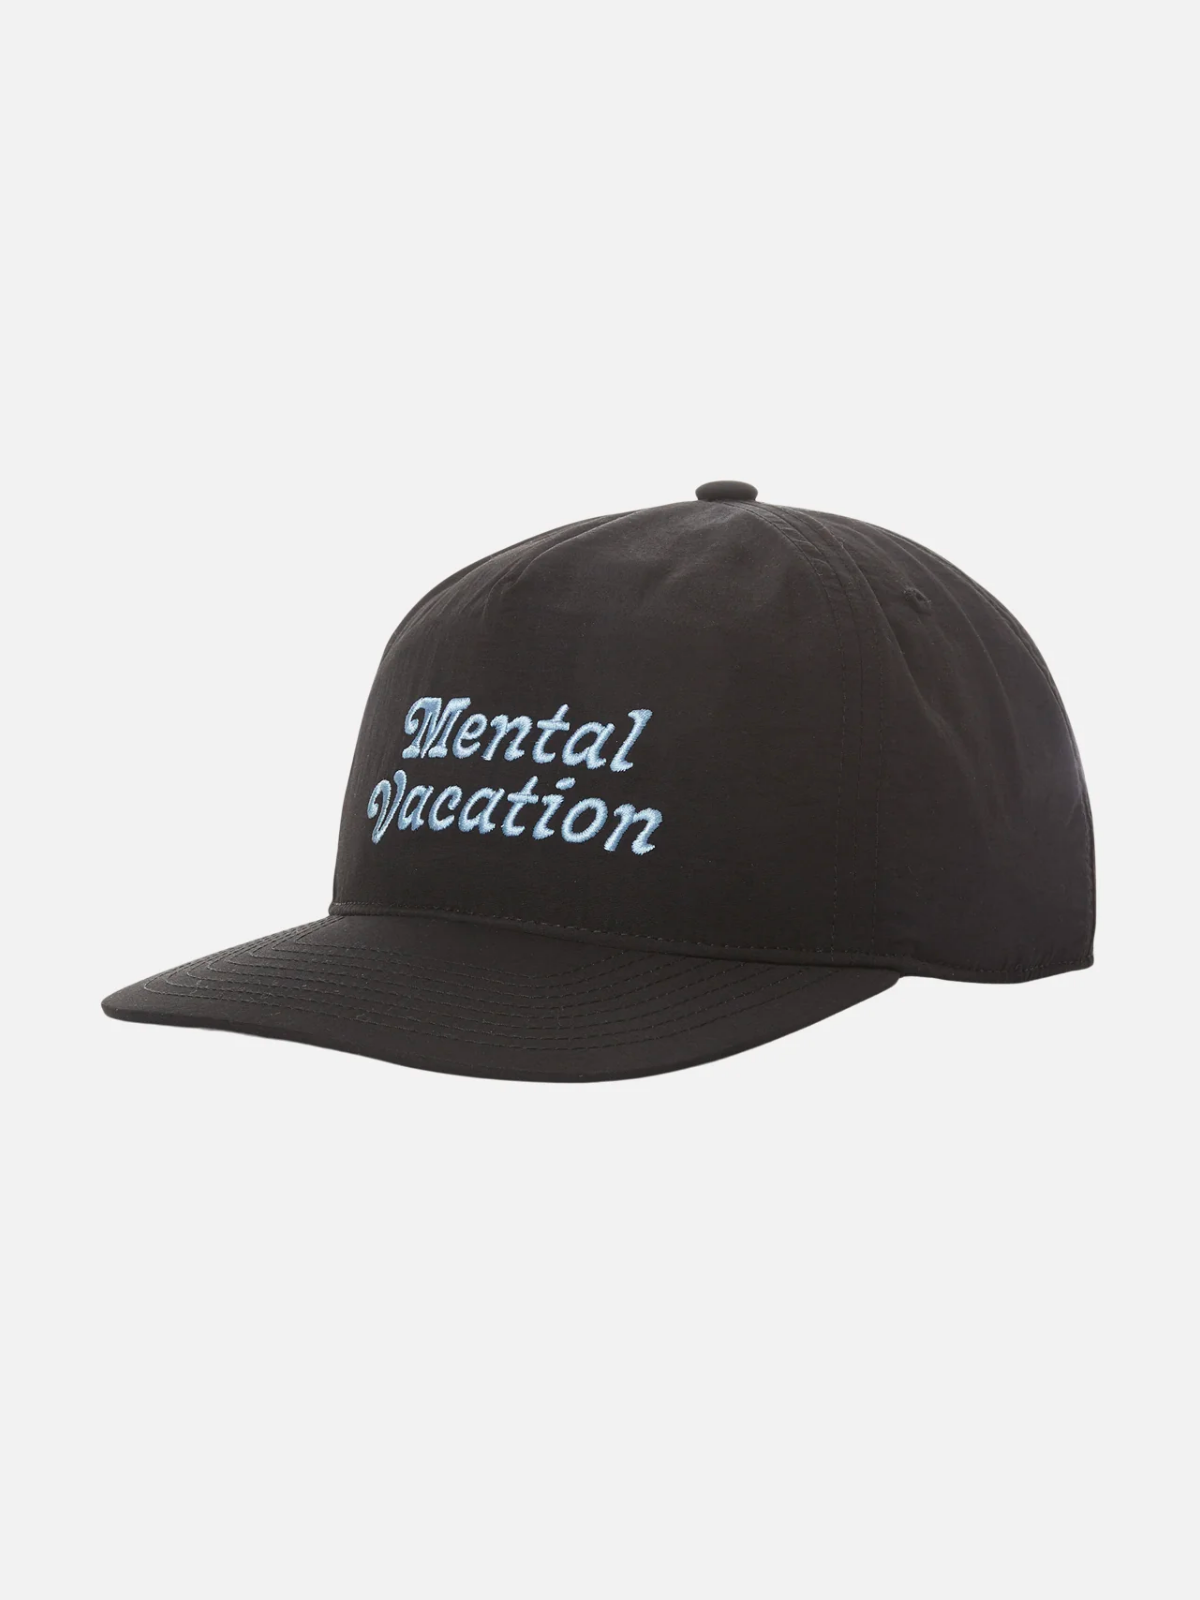 katin mental vacation hat nylon black baby blue embroidered snapback cap kempt athens ga georgia men's clothing store